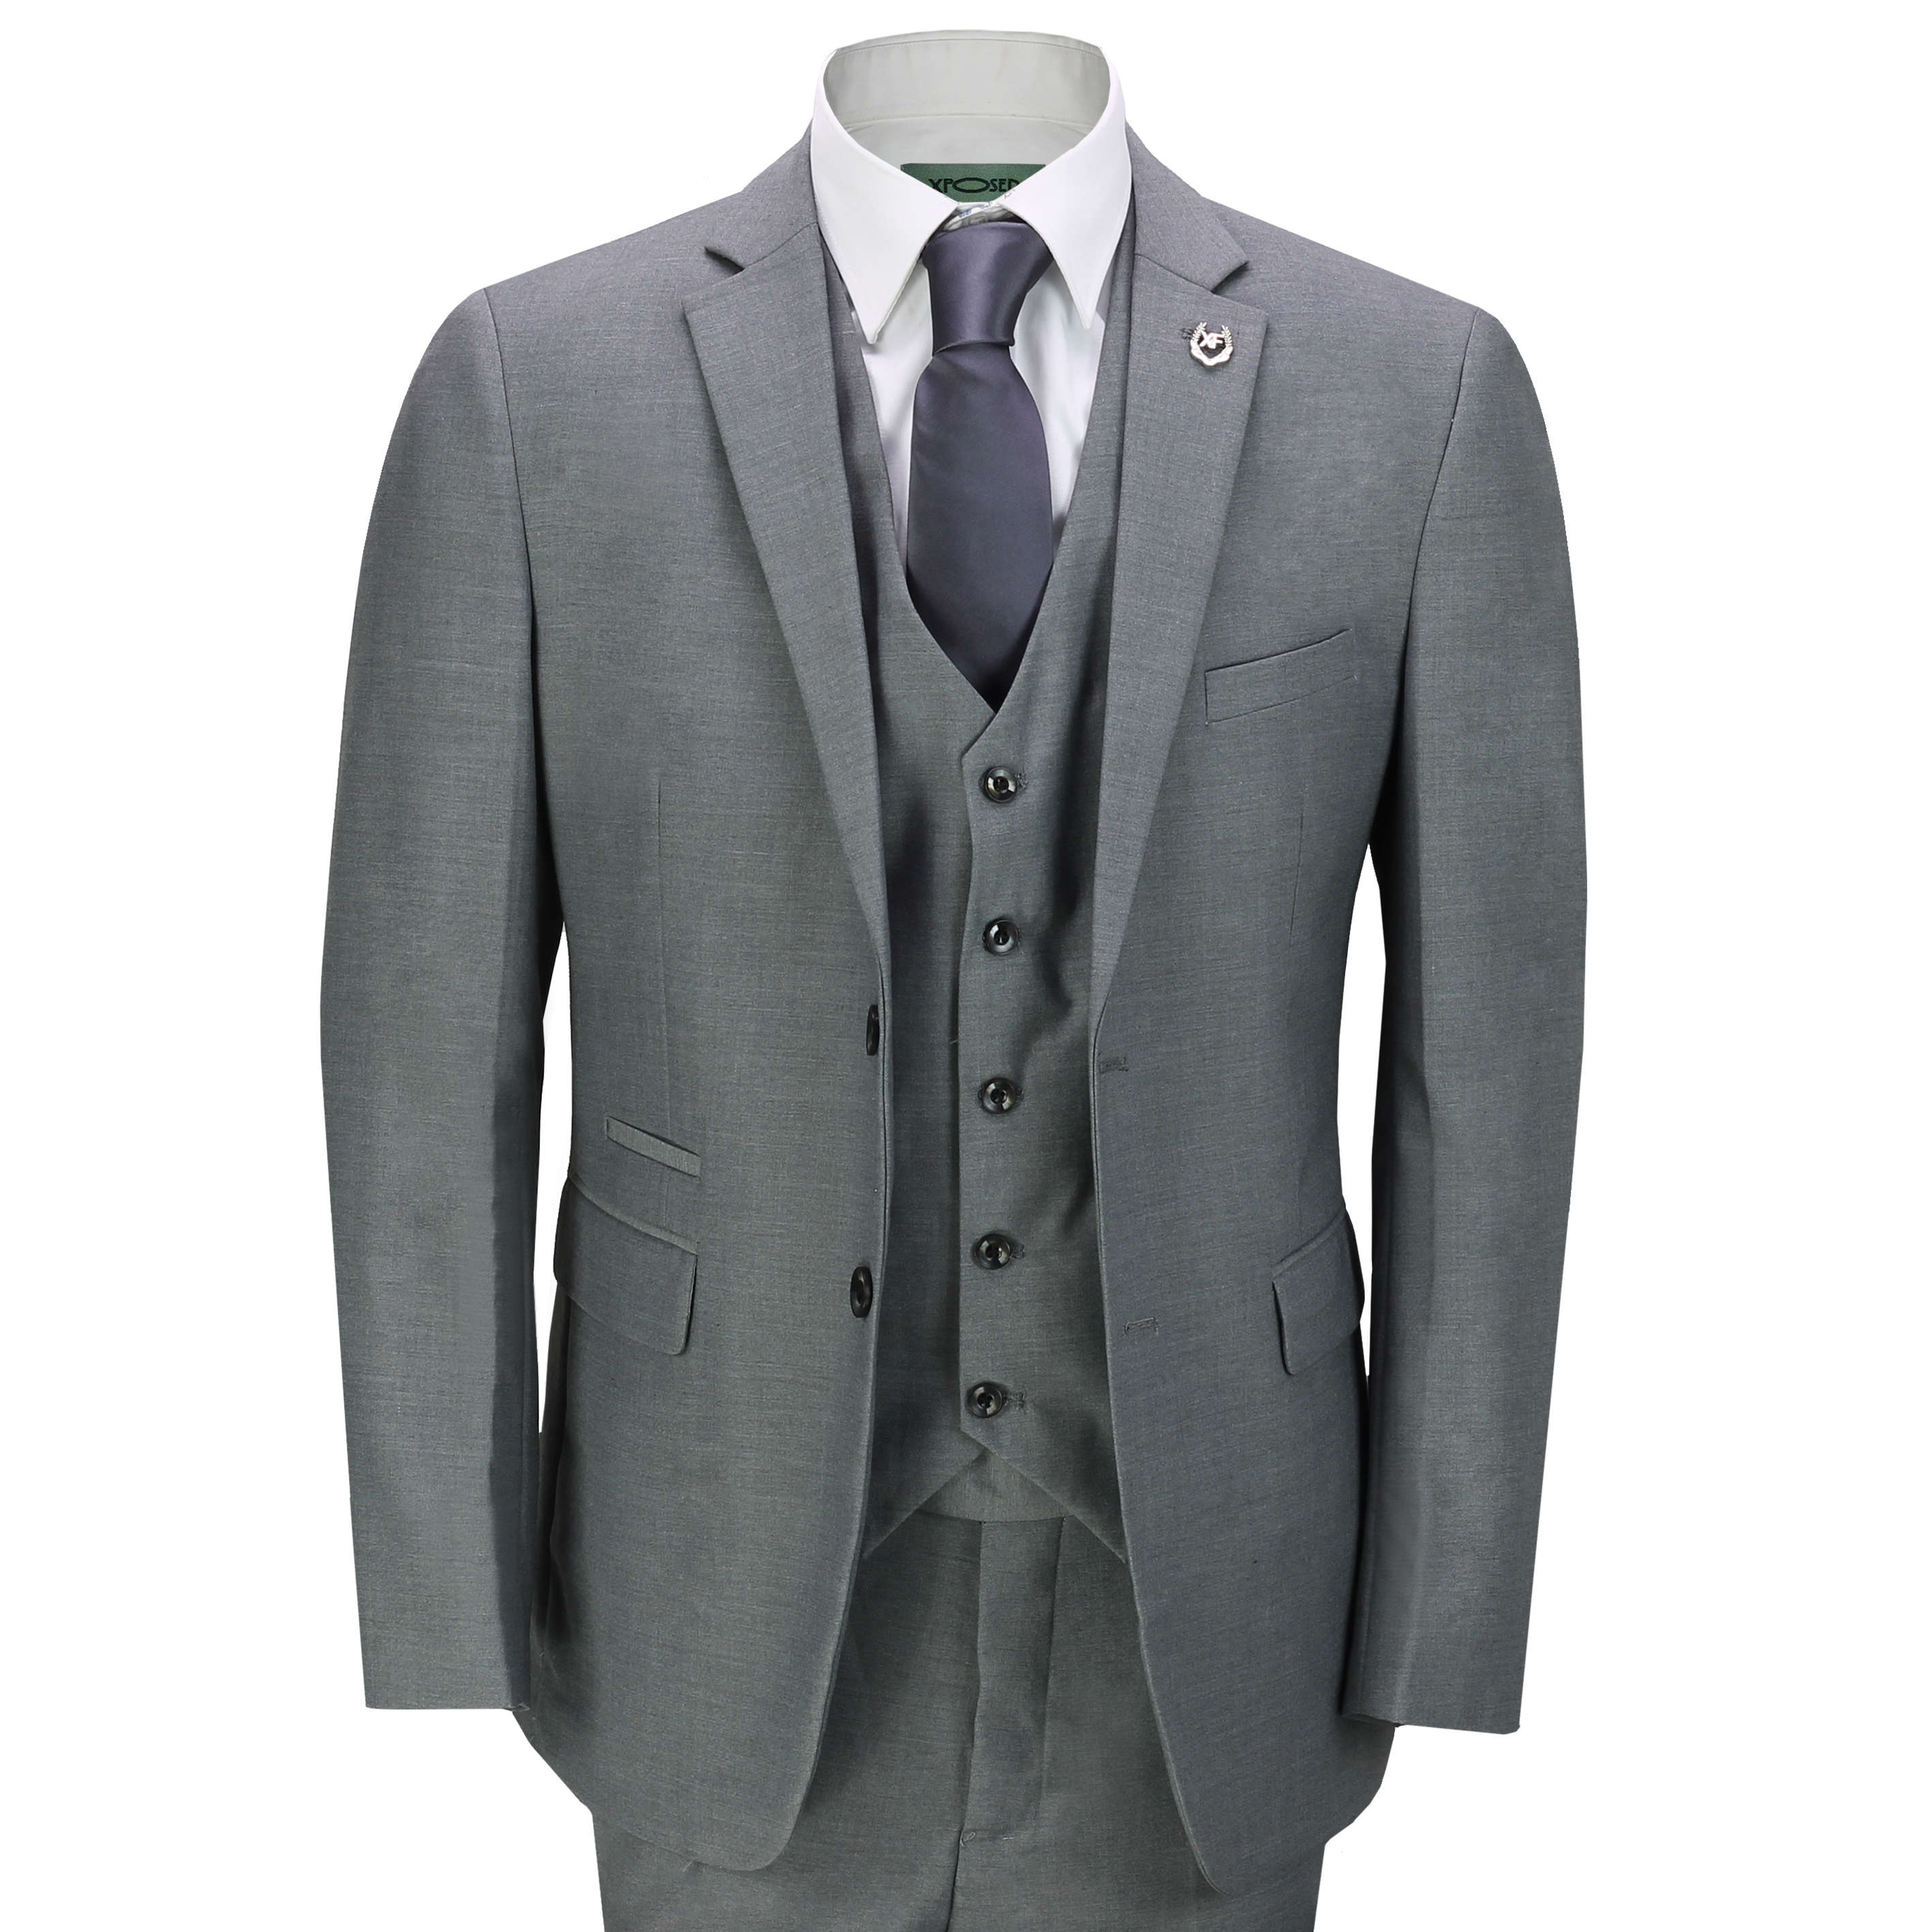 grey suit smart casual